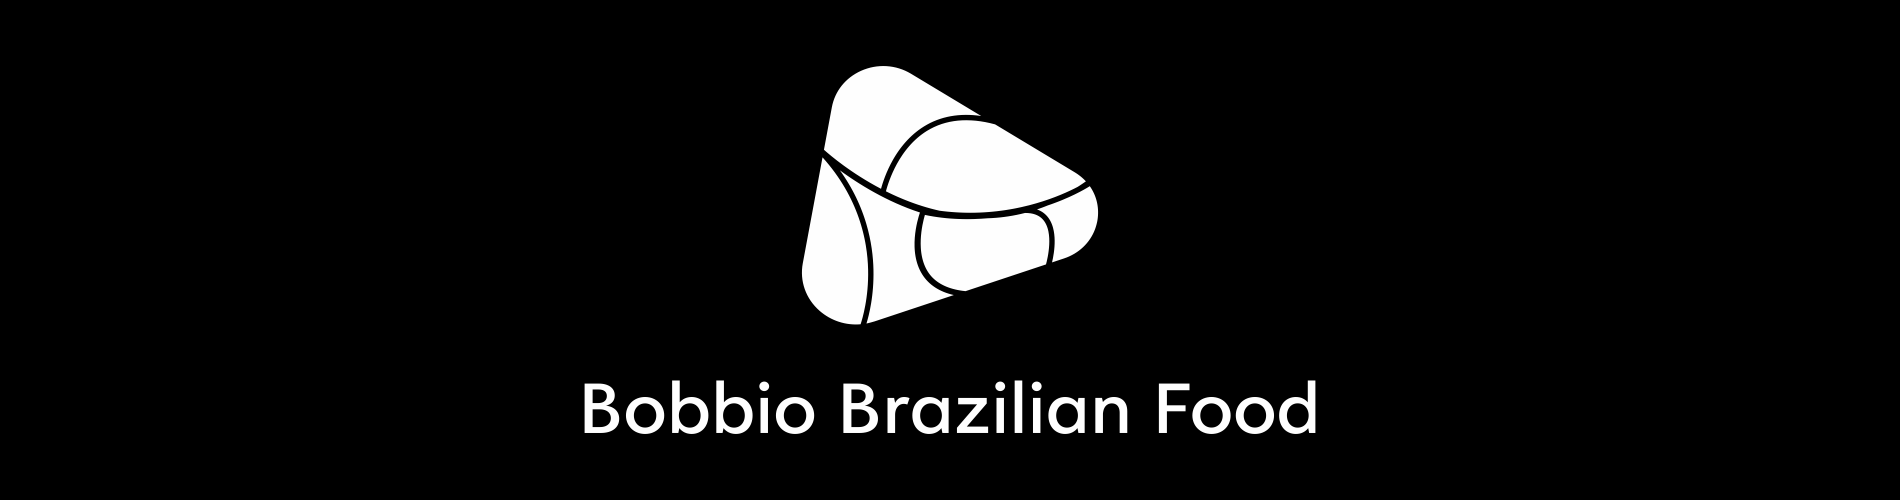 Bobbio Brazilian Food